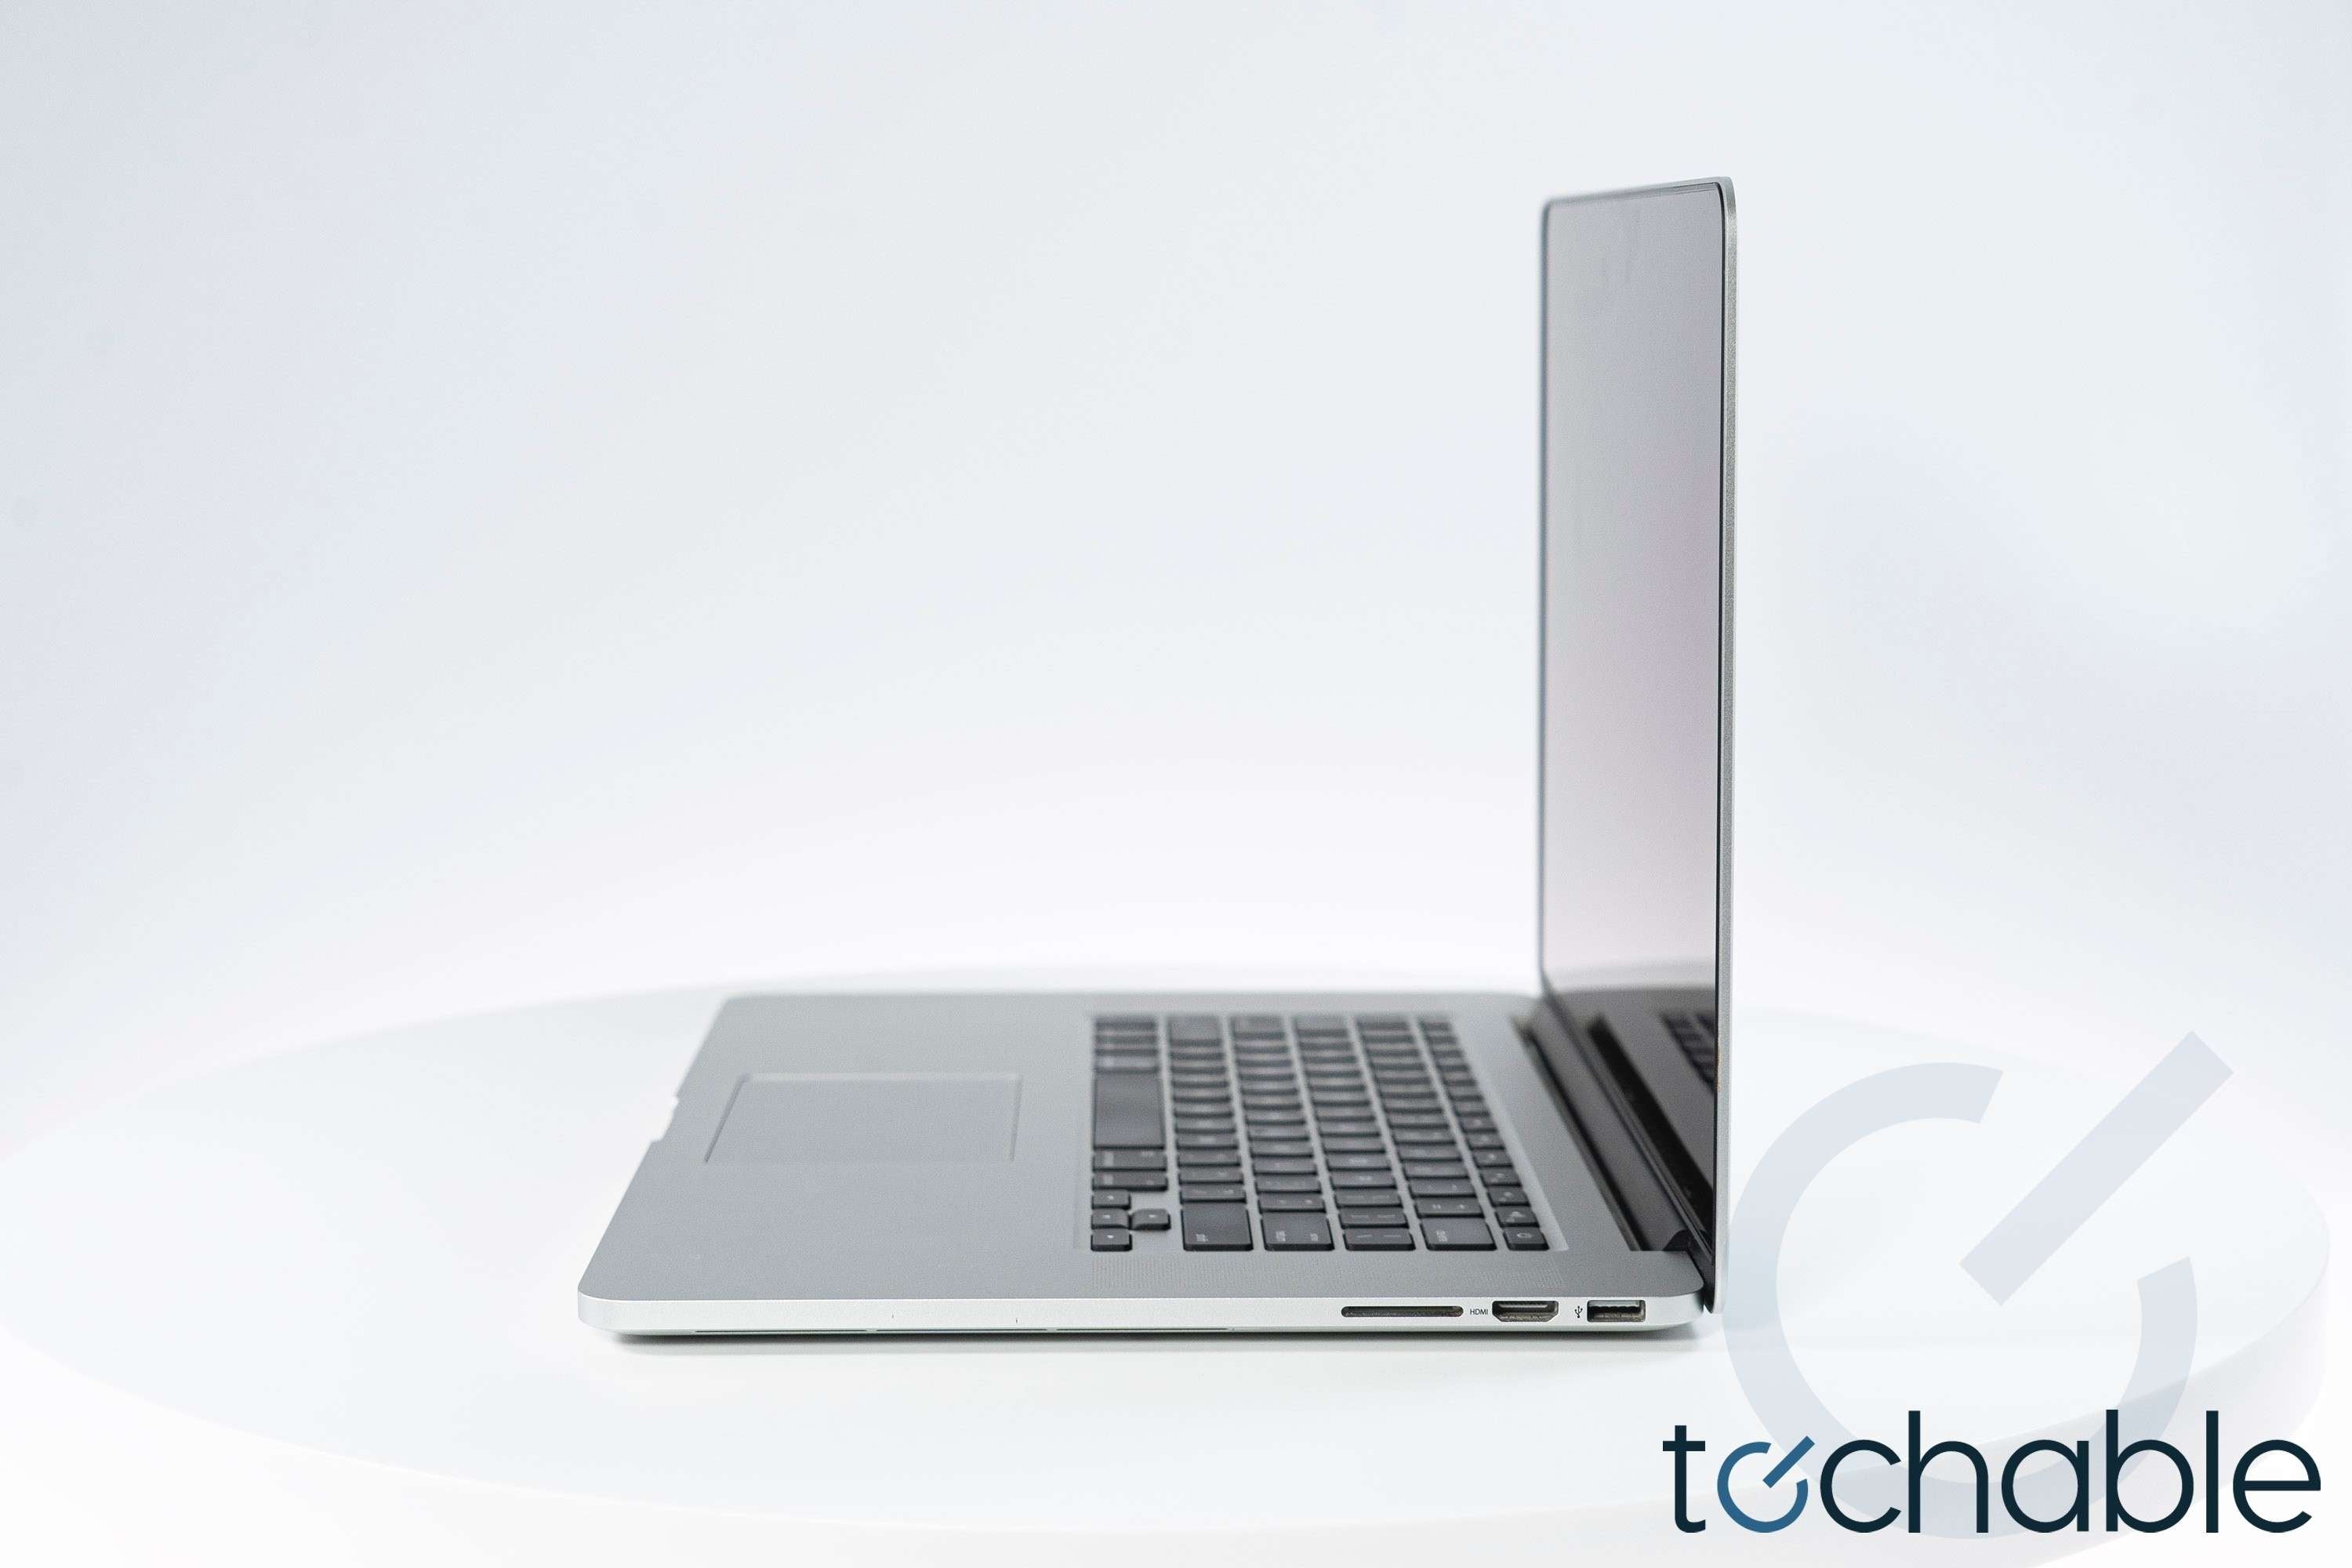 Buy Used & Refurbished Apple MacBook Pro Retina Core i7-4750HQ